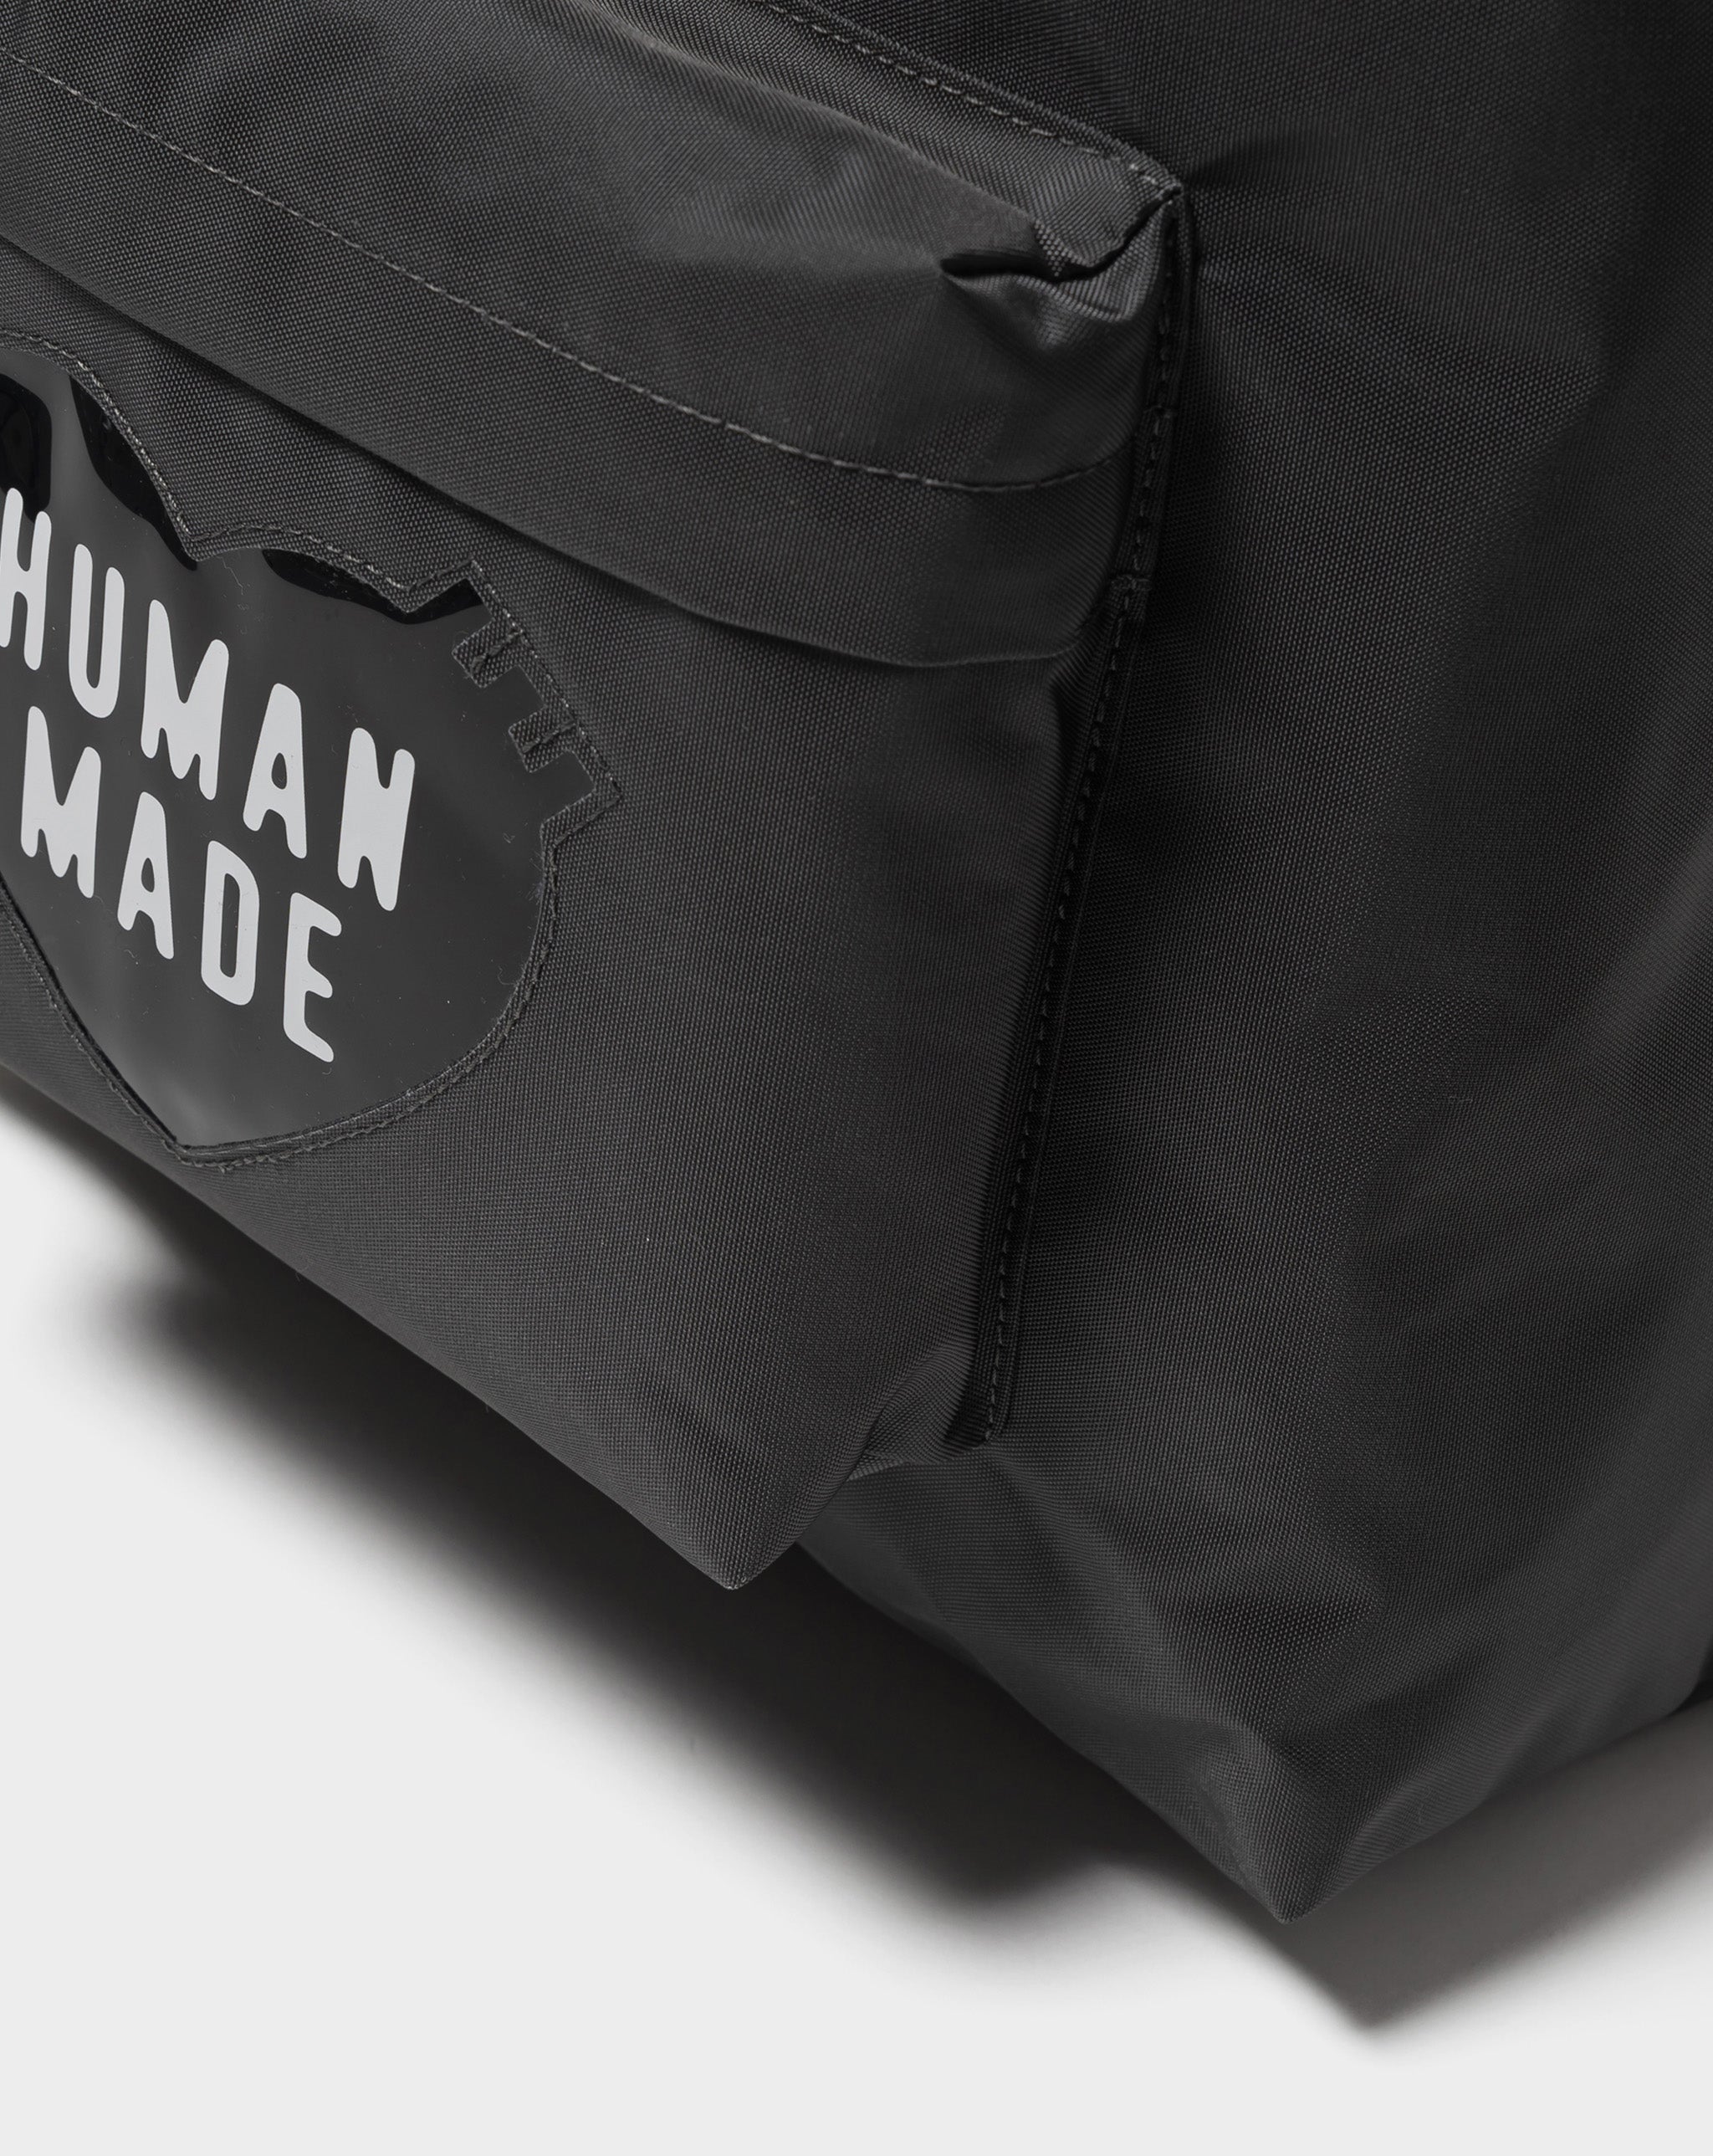 Human Made Backpack  - XHIBITION